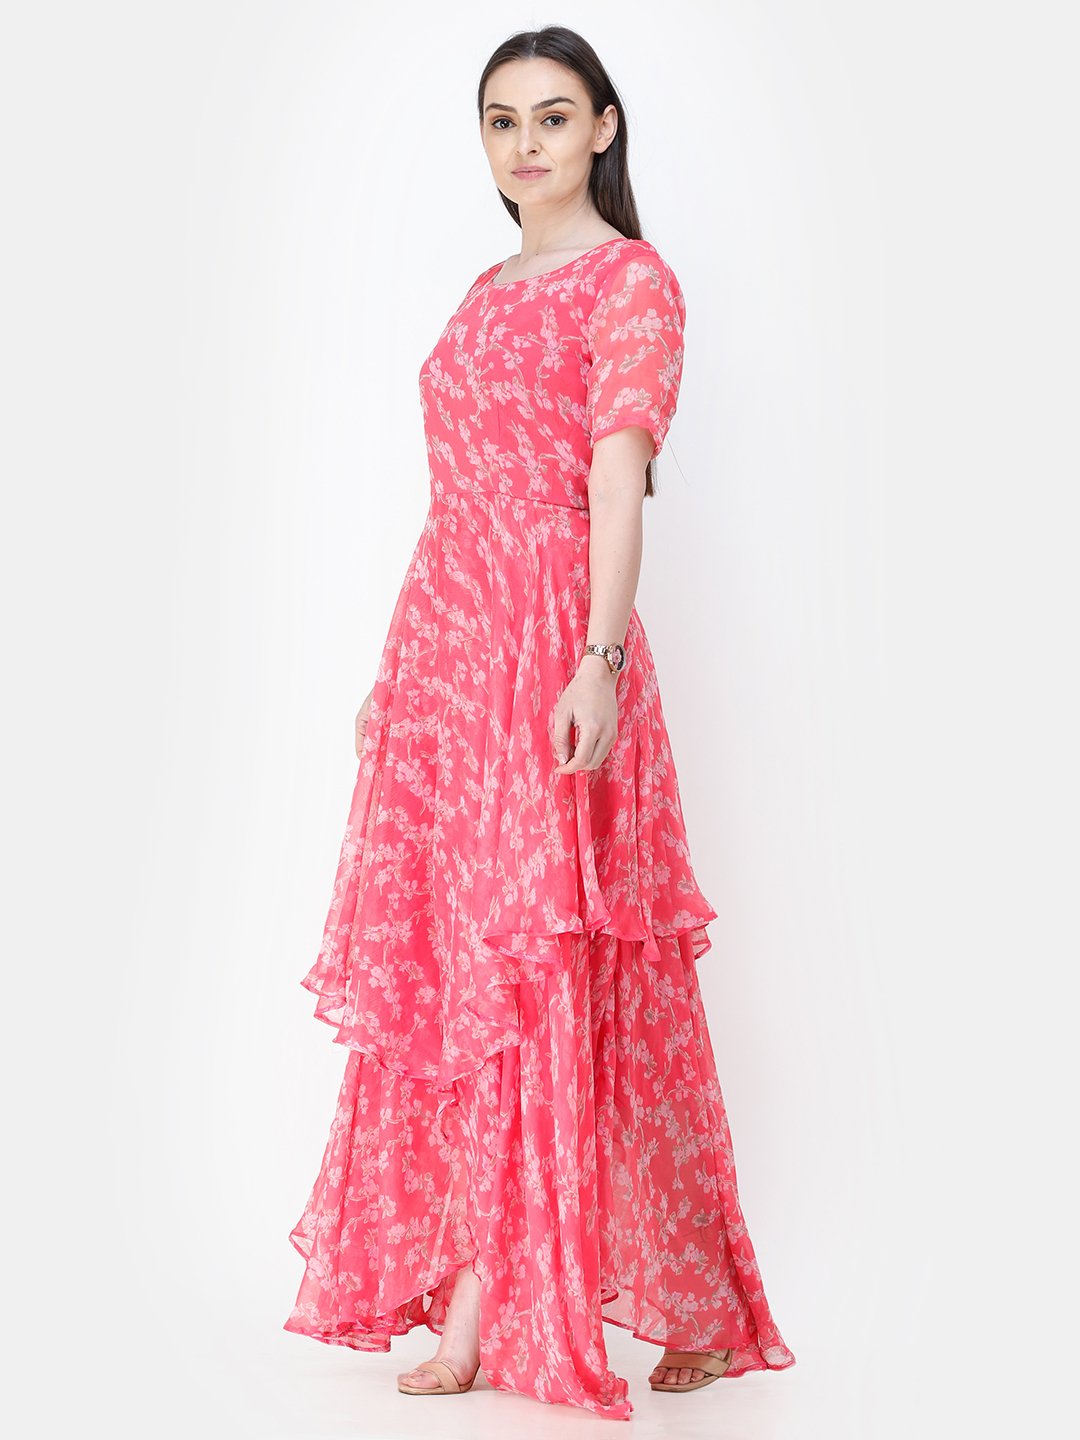 Scorpius pink floral frilled long dress